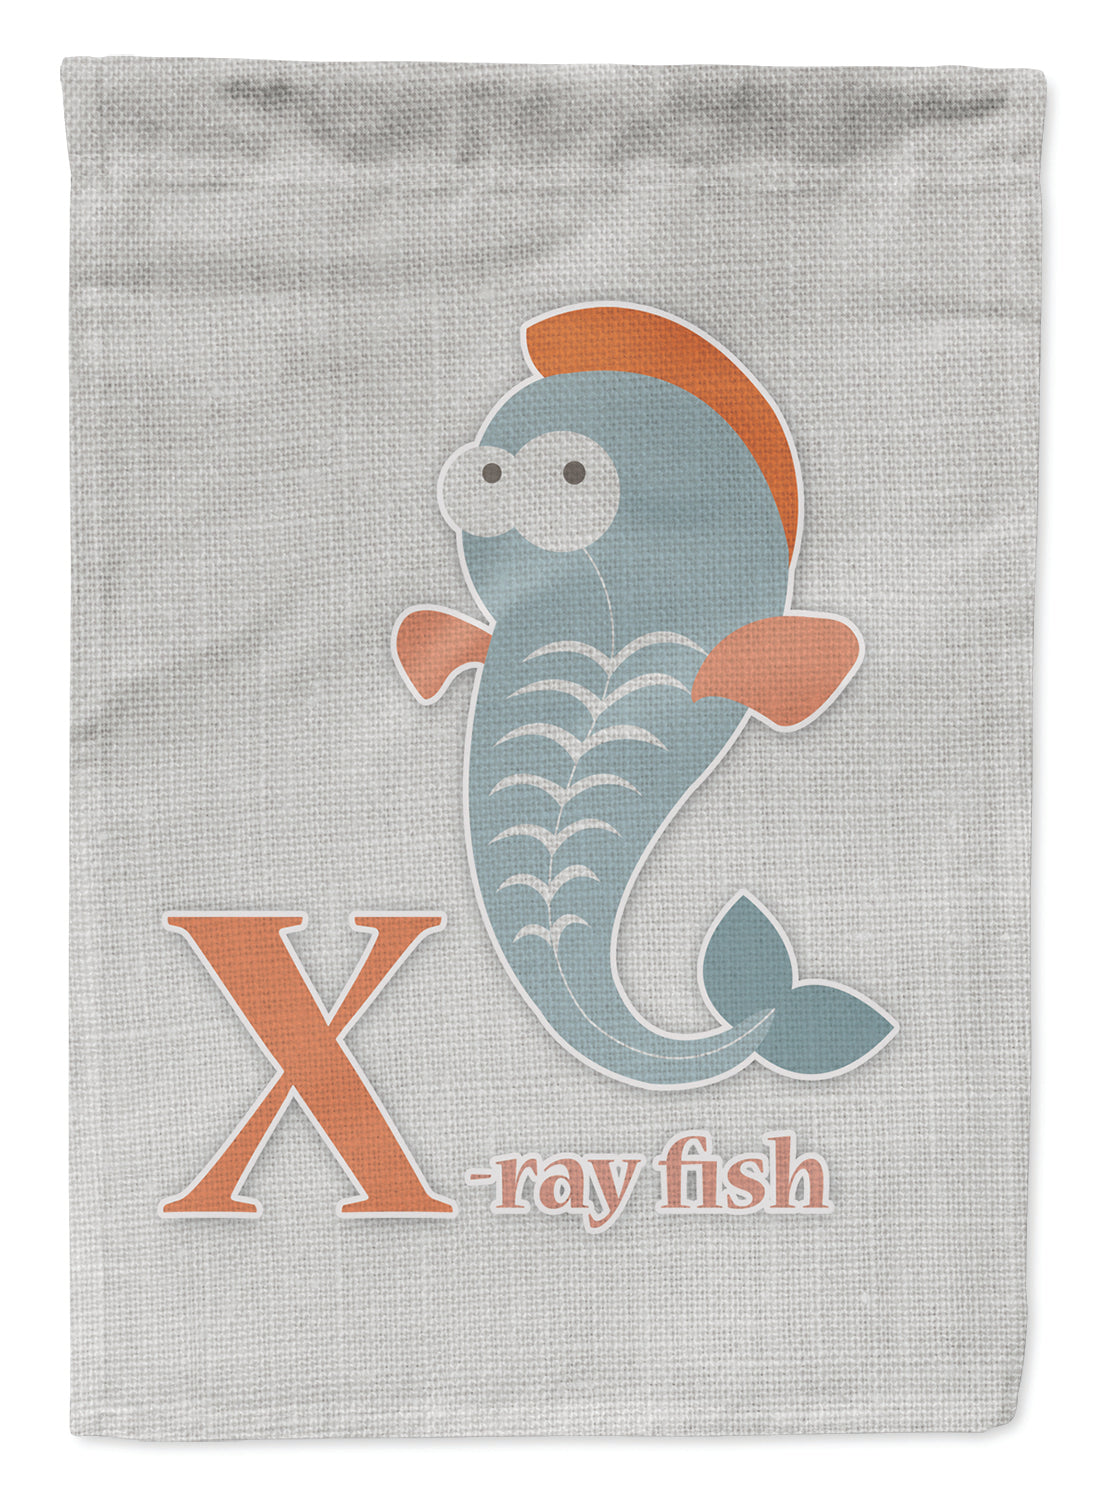 Alphabet X for Xray Fish Flag Garden Size BB5749GF